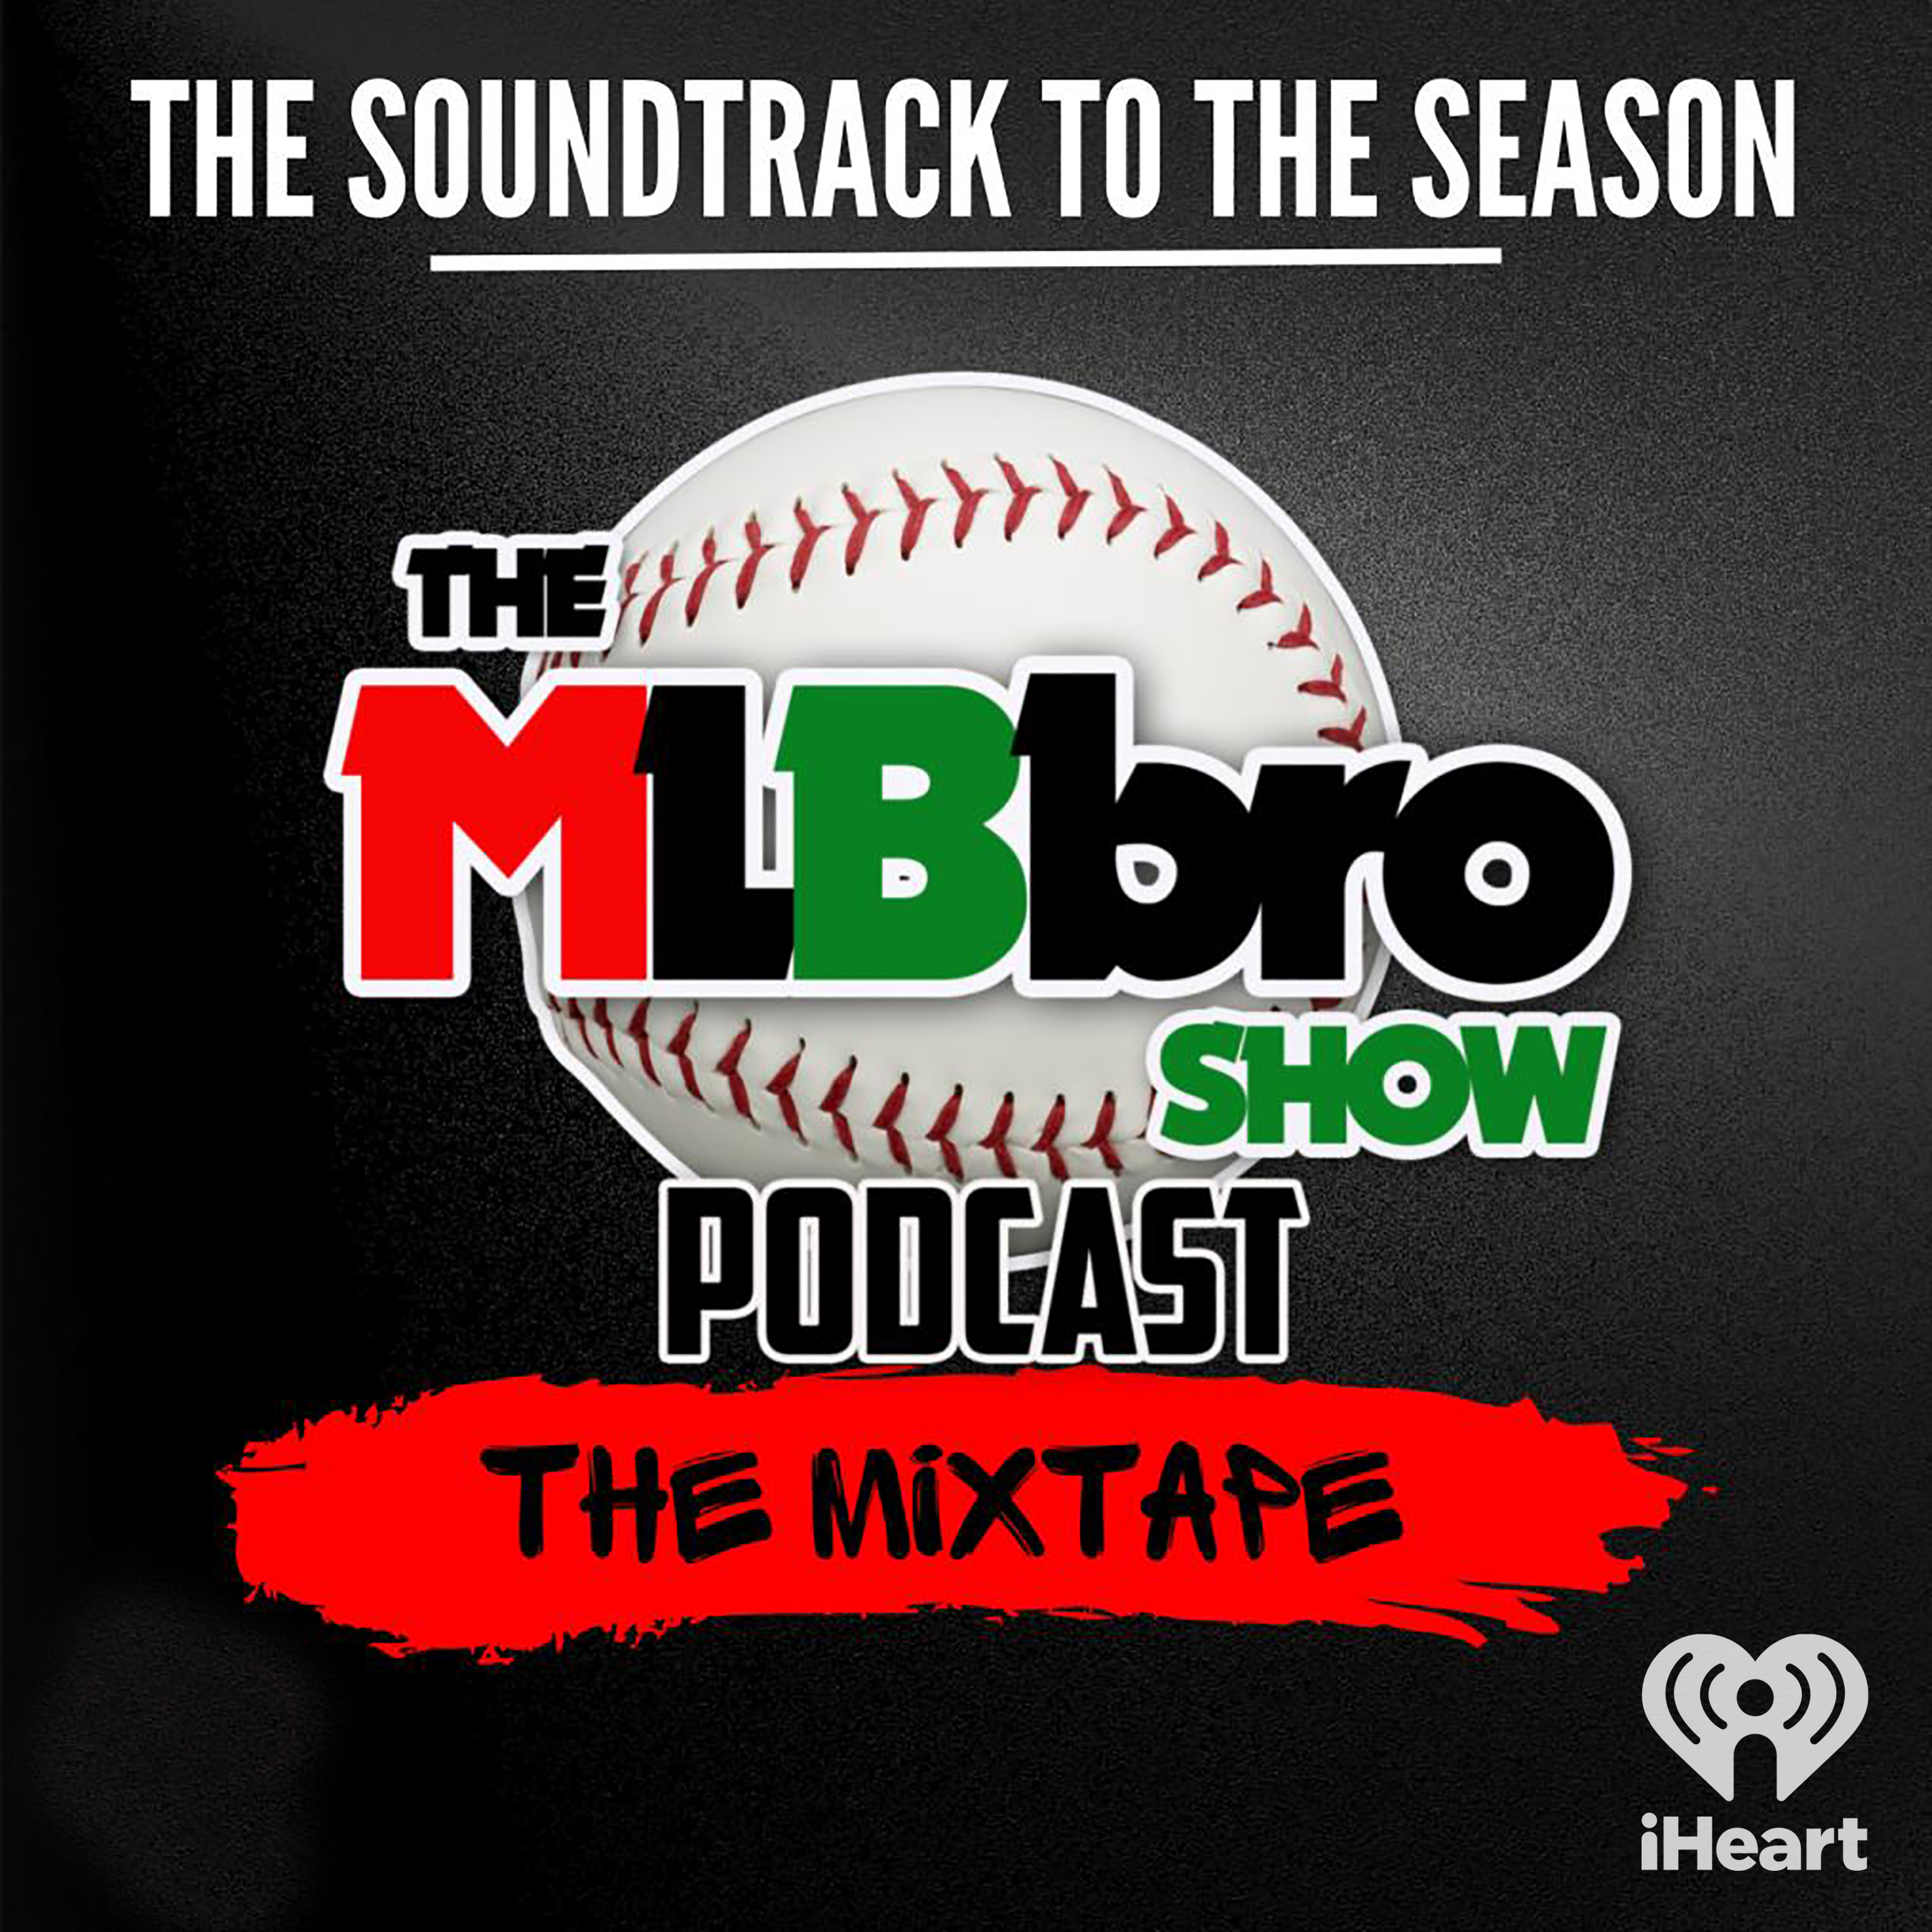 MLBbro Show Podcast The Mixtape Vol 3 Episode 19